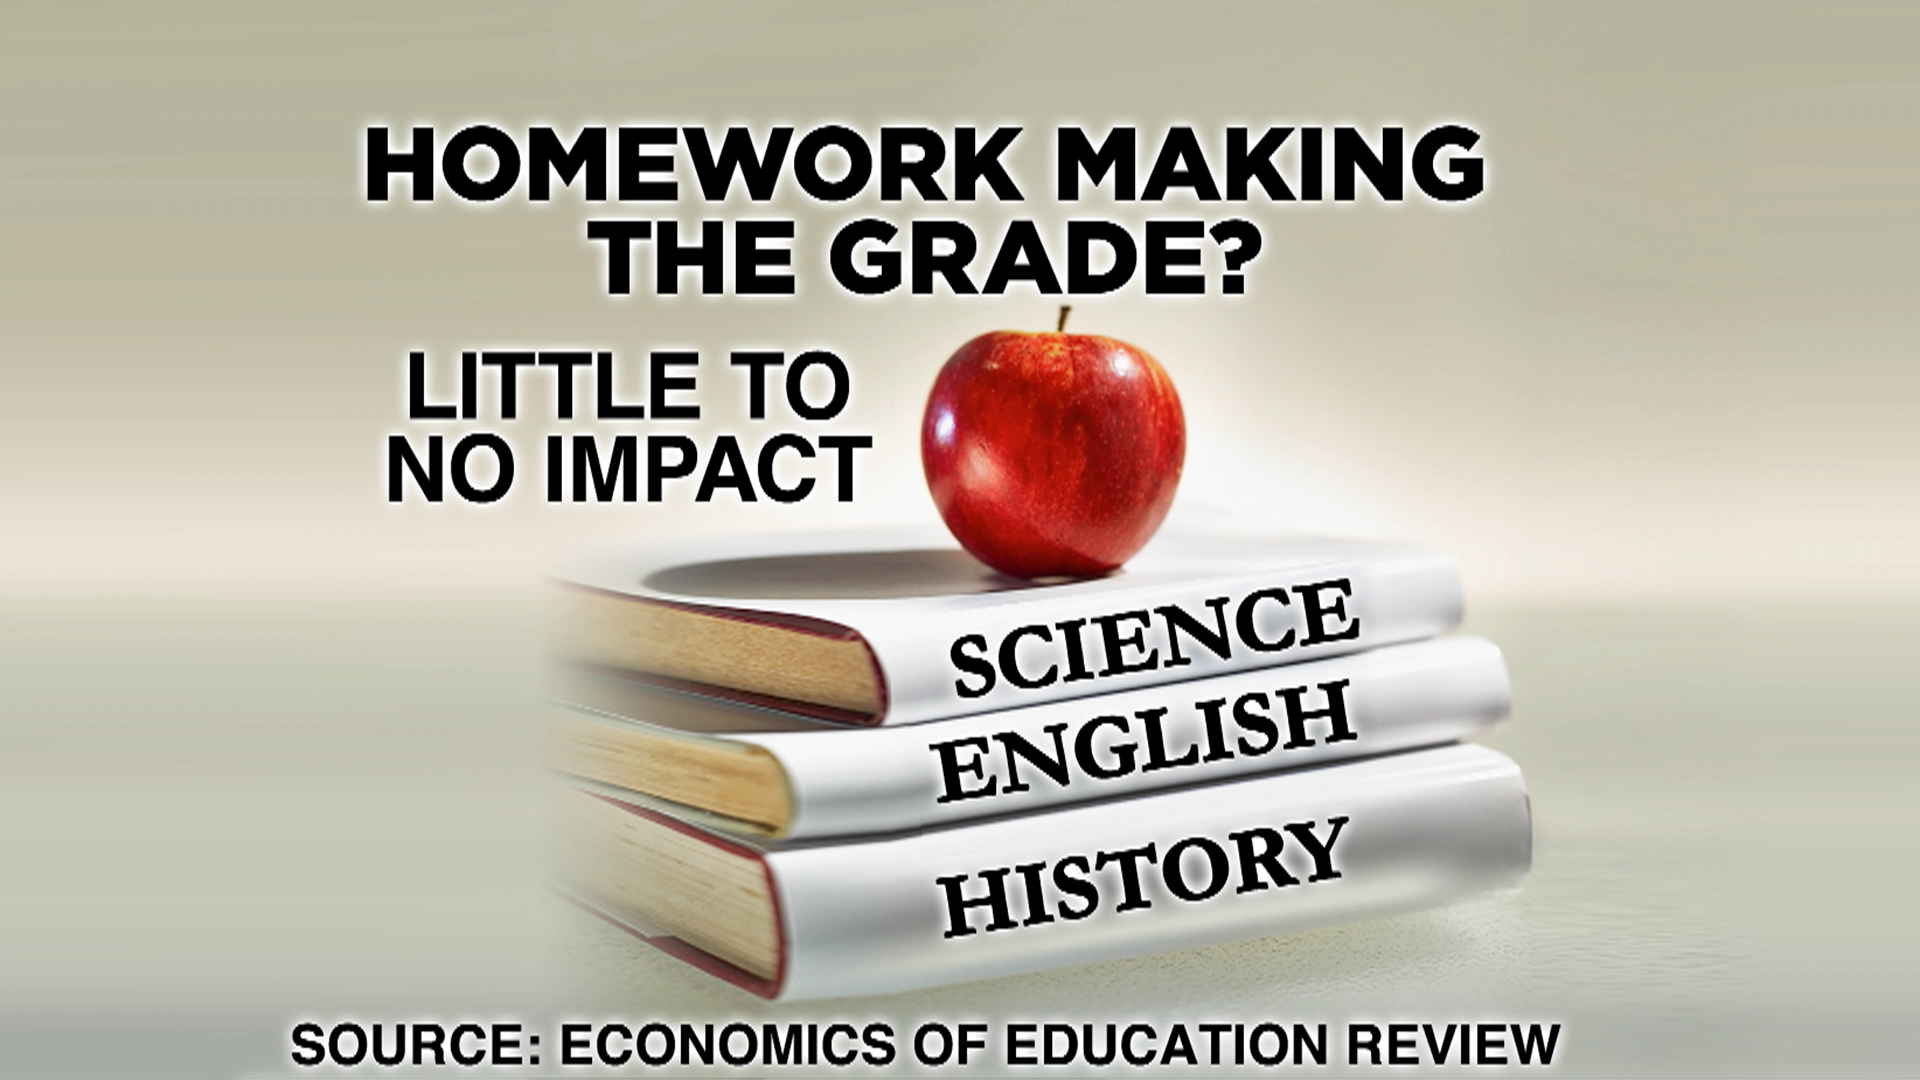 Argumentative essay on homework harmful or helpful